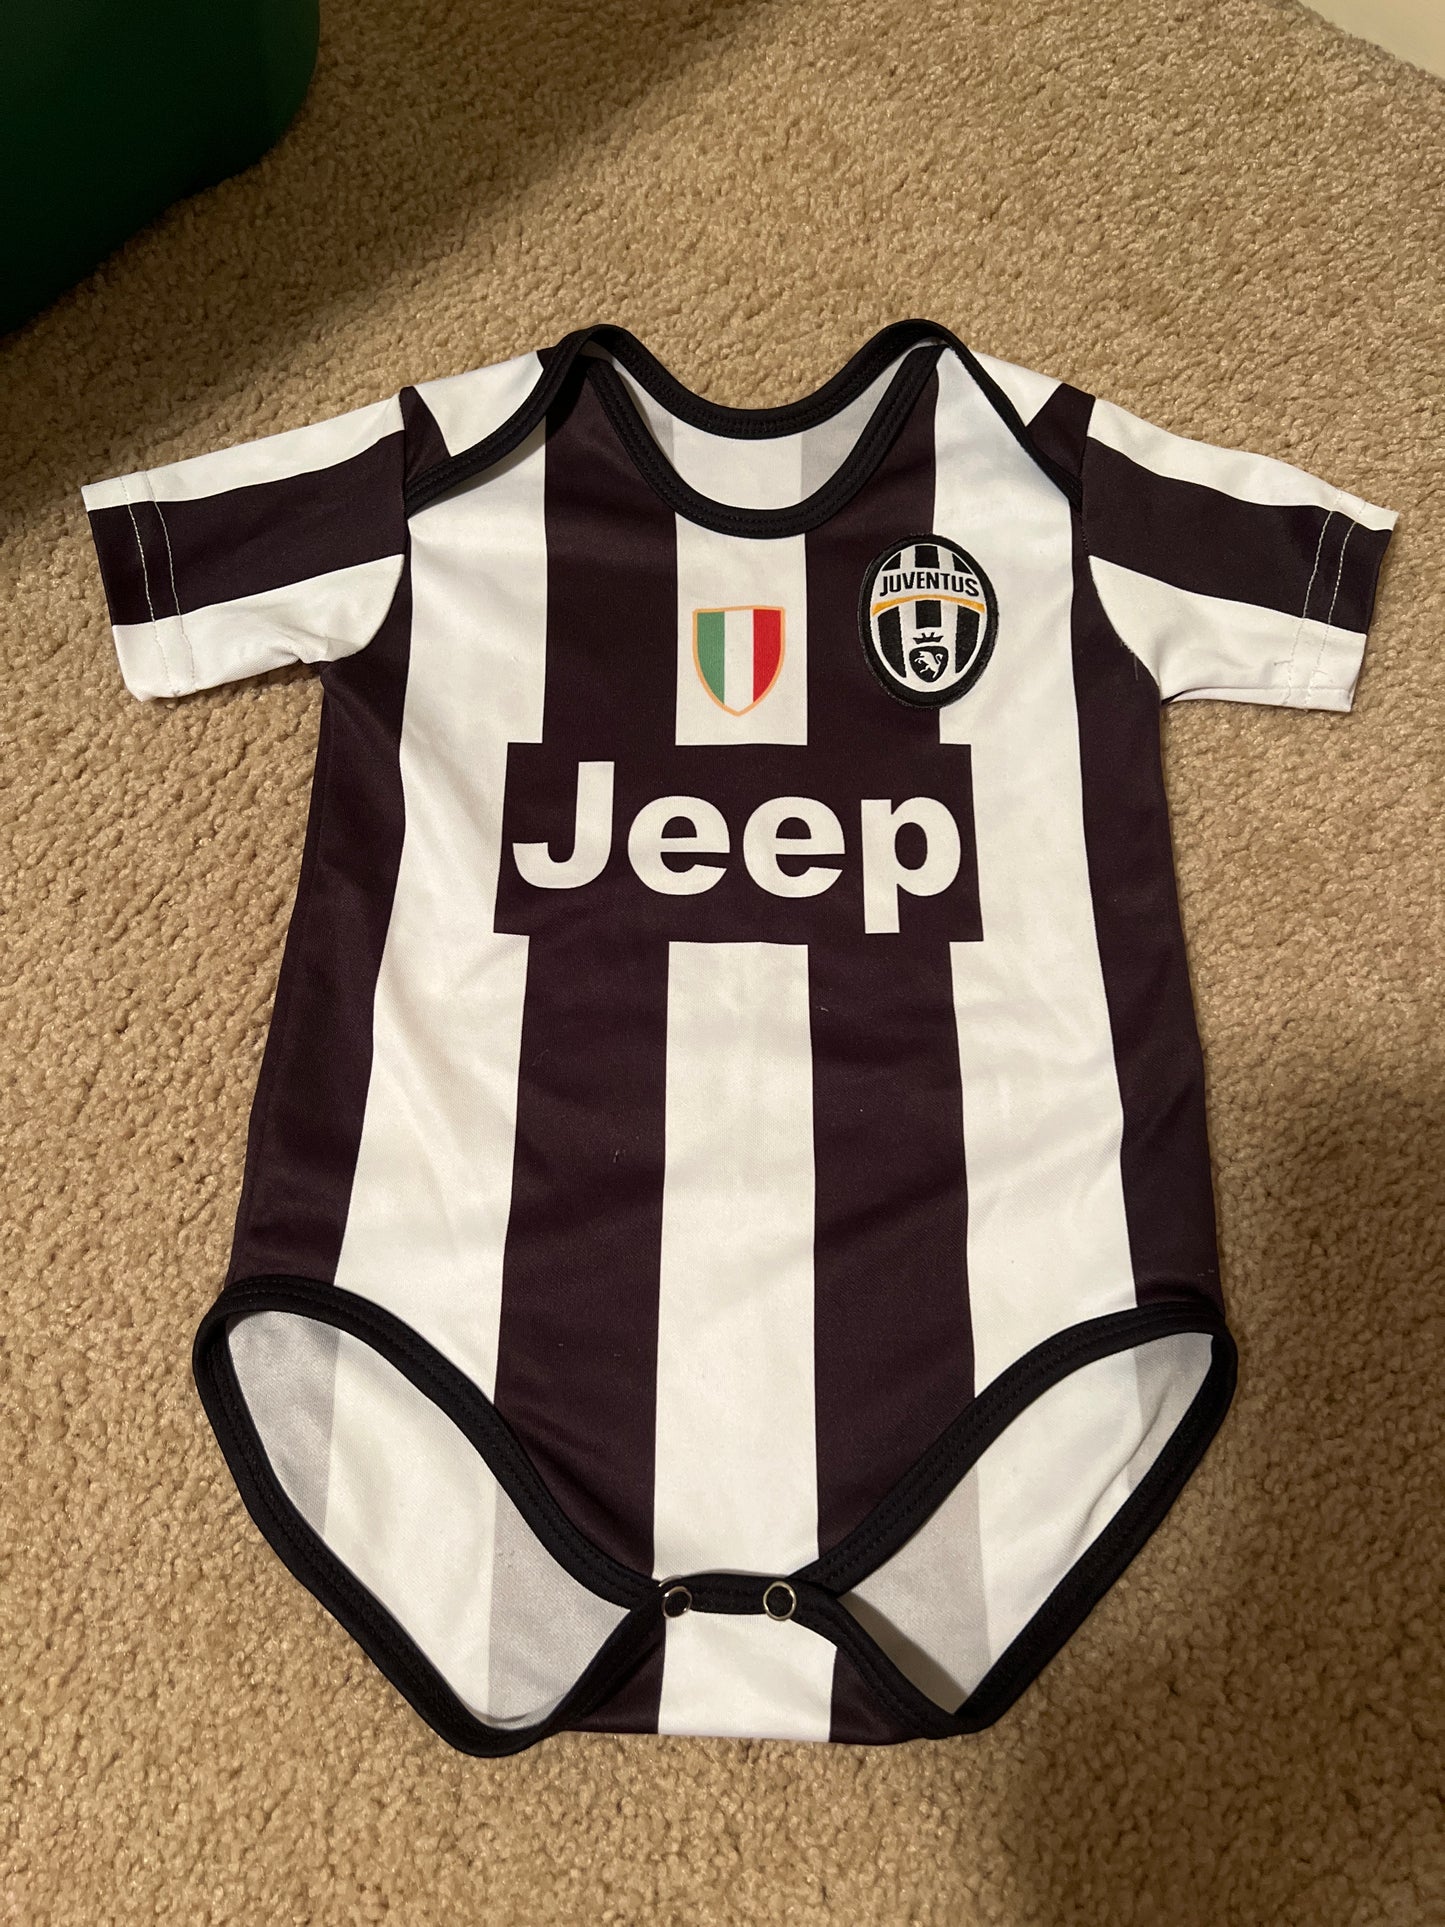 Boys Juventus soccer onesie, size 6-9 months PPU 41076